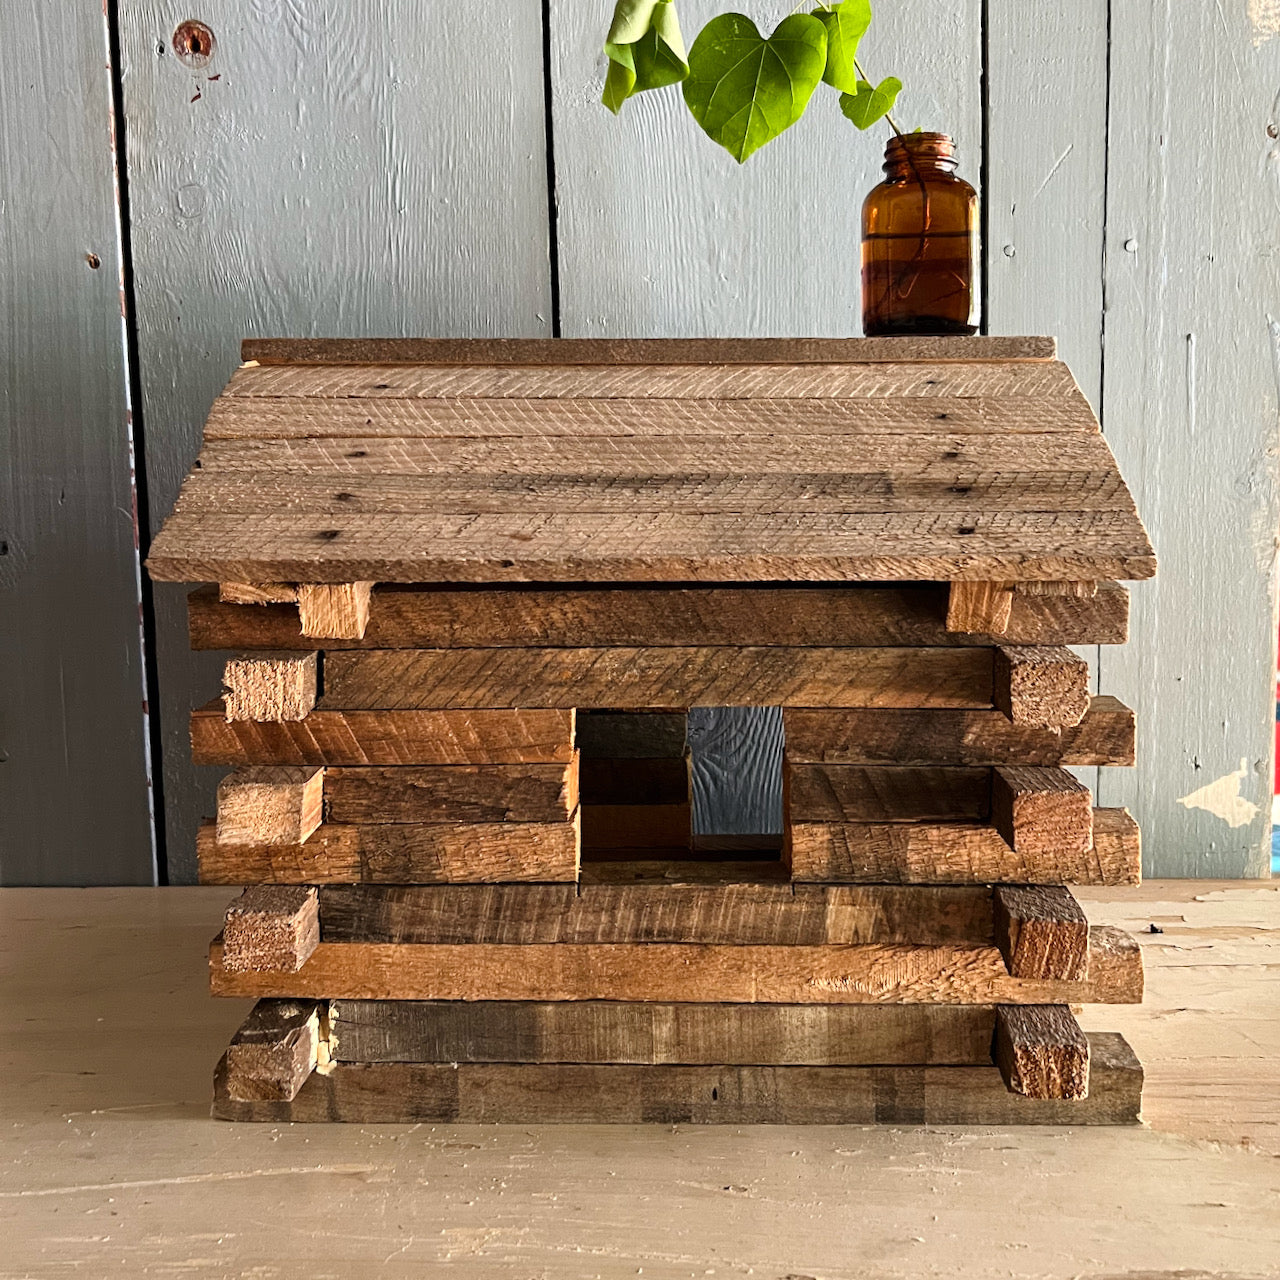 Rustic Handbuilt Amish Toy Log Cabin